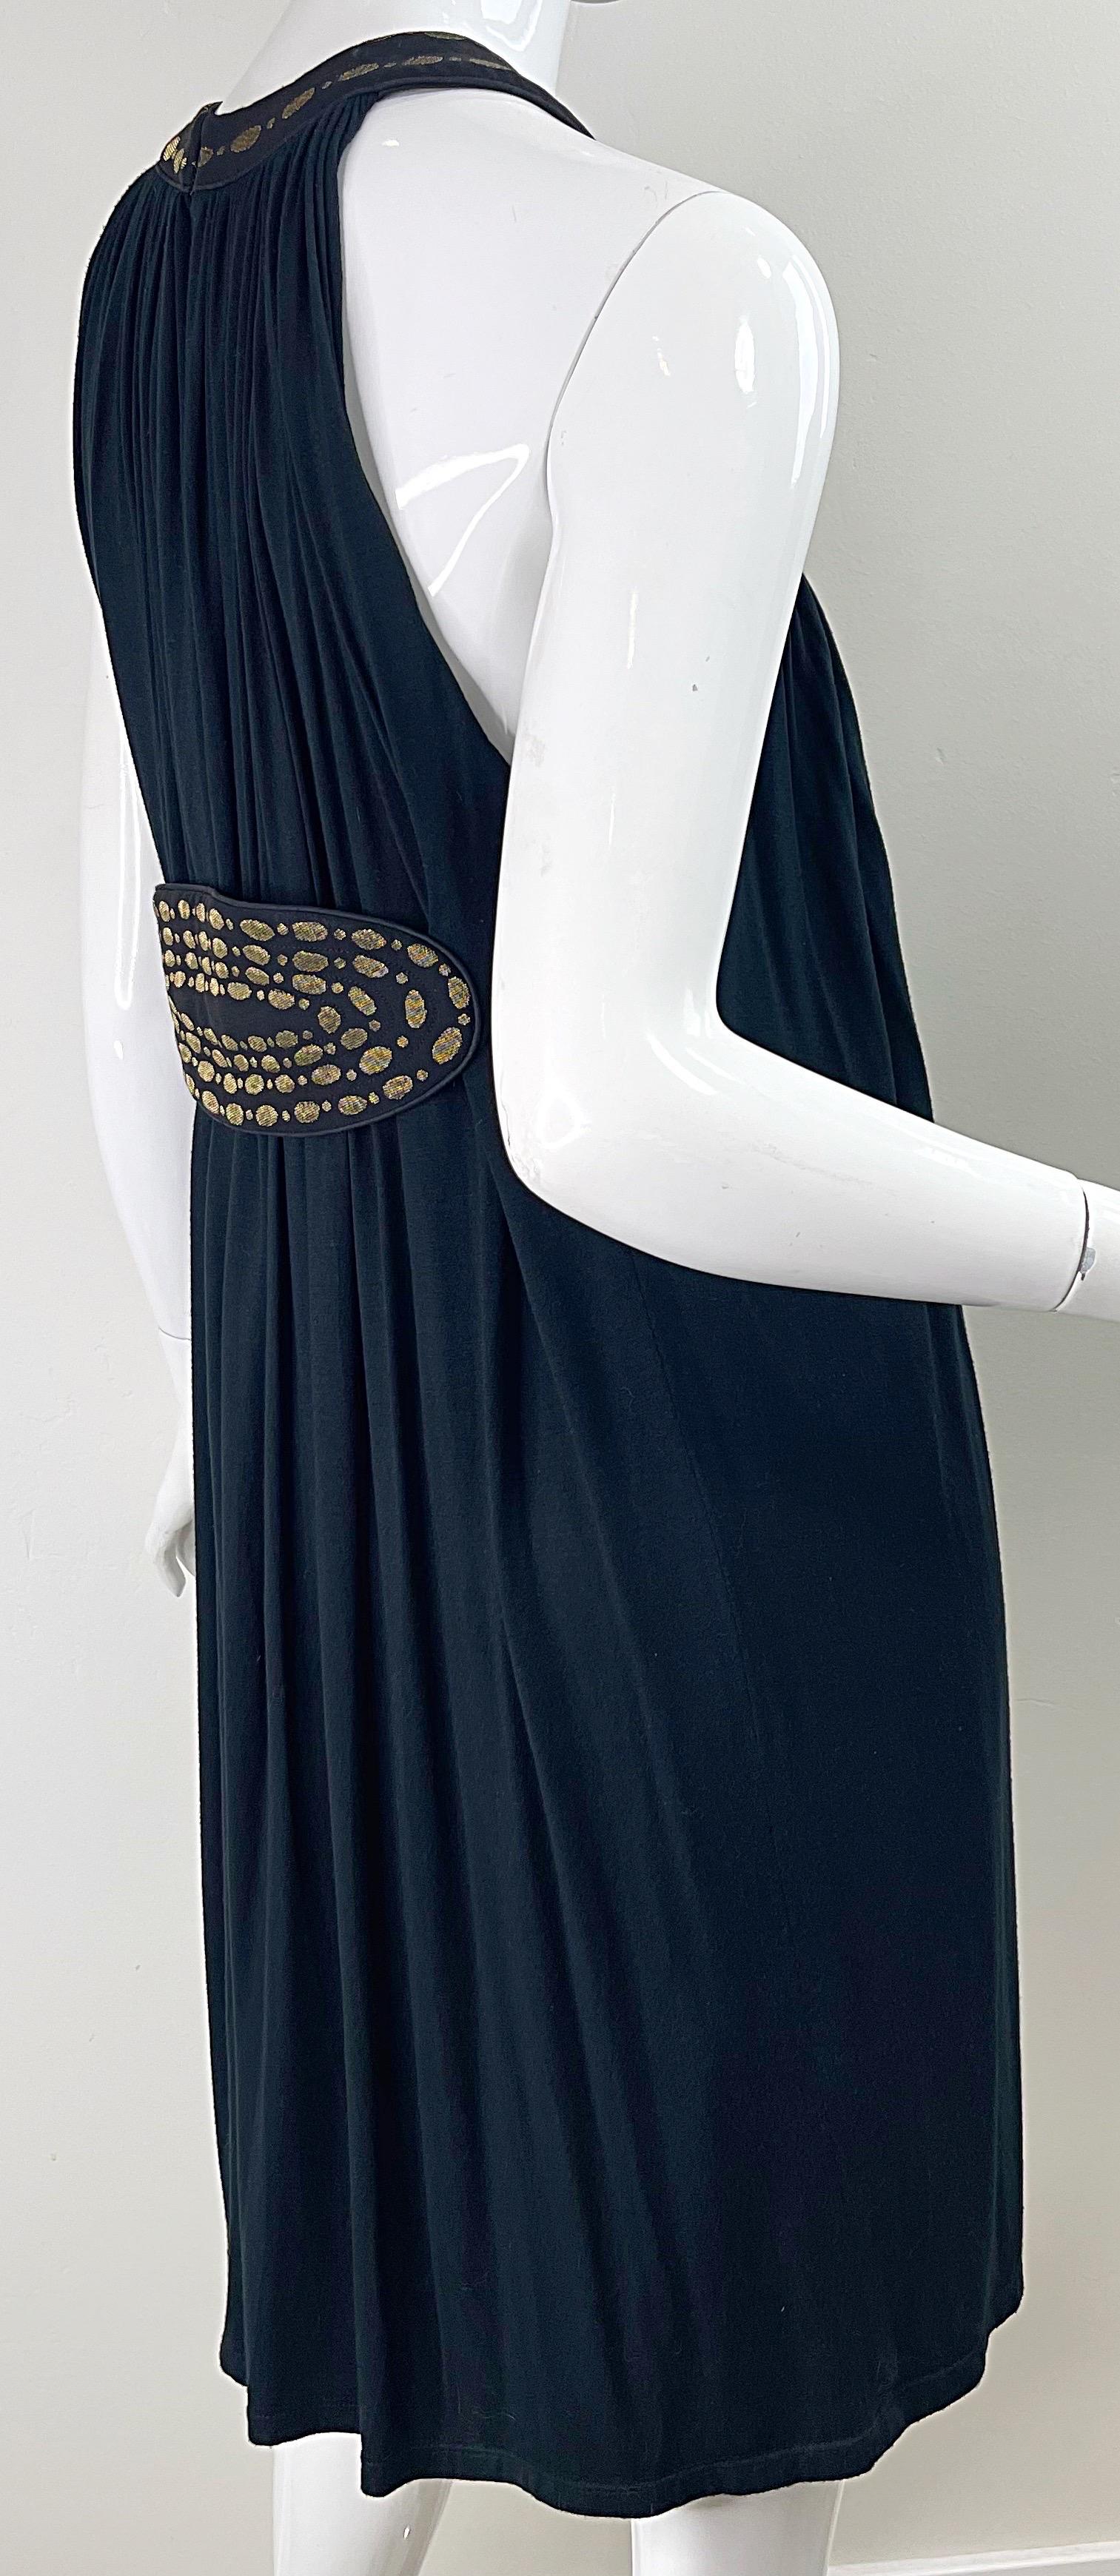 Martin Grant 2000s Black and Gold Cotton Vintage Y2K Smock Dress Size Medium For Sale 6